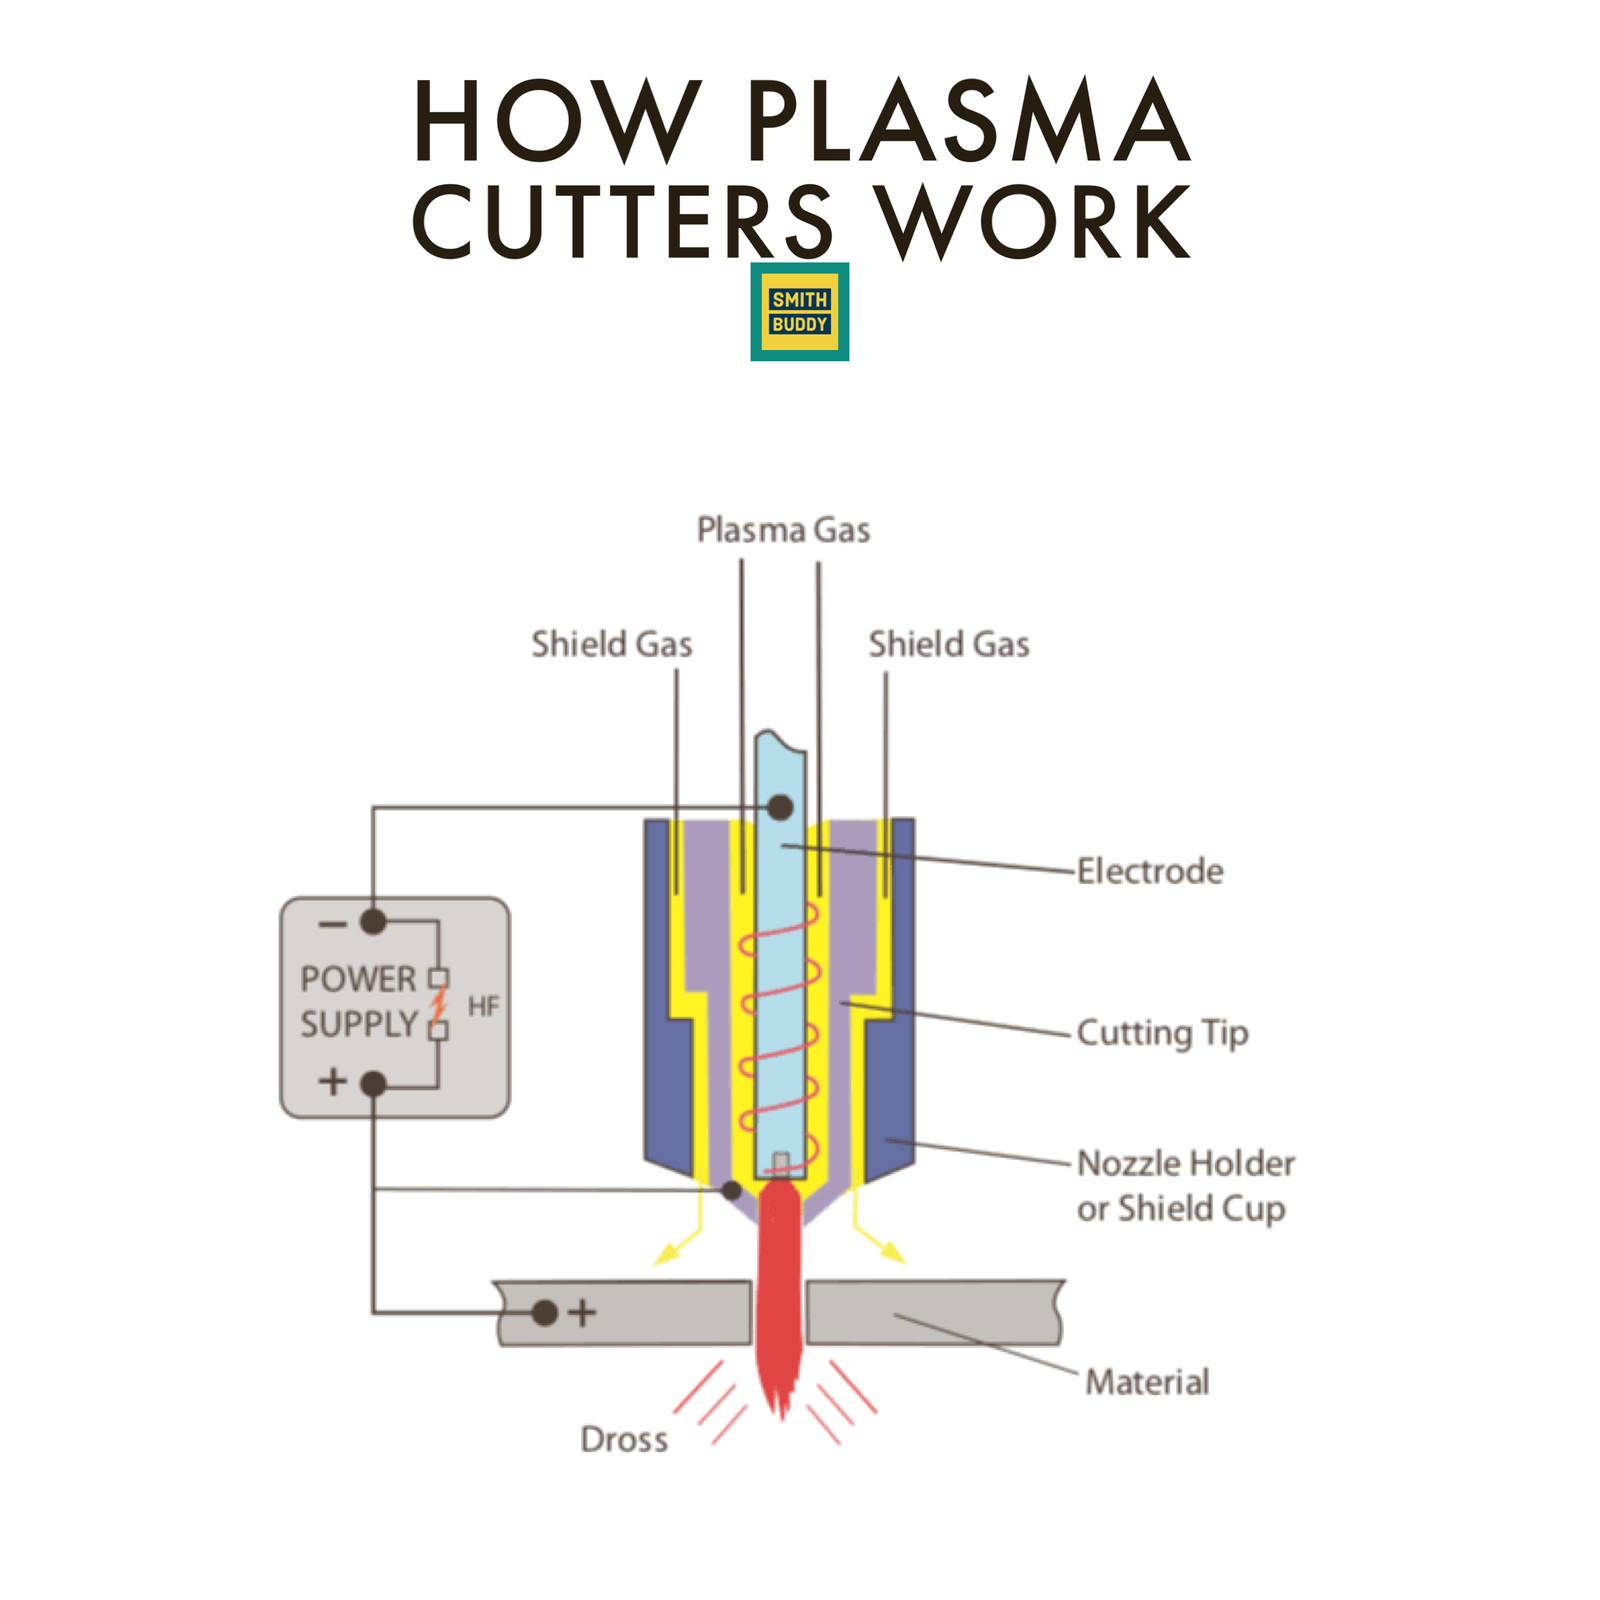 How plasma cutters work